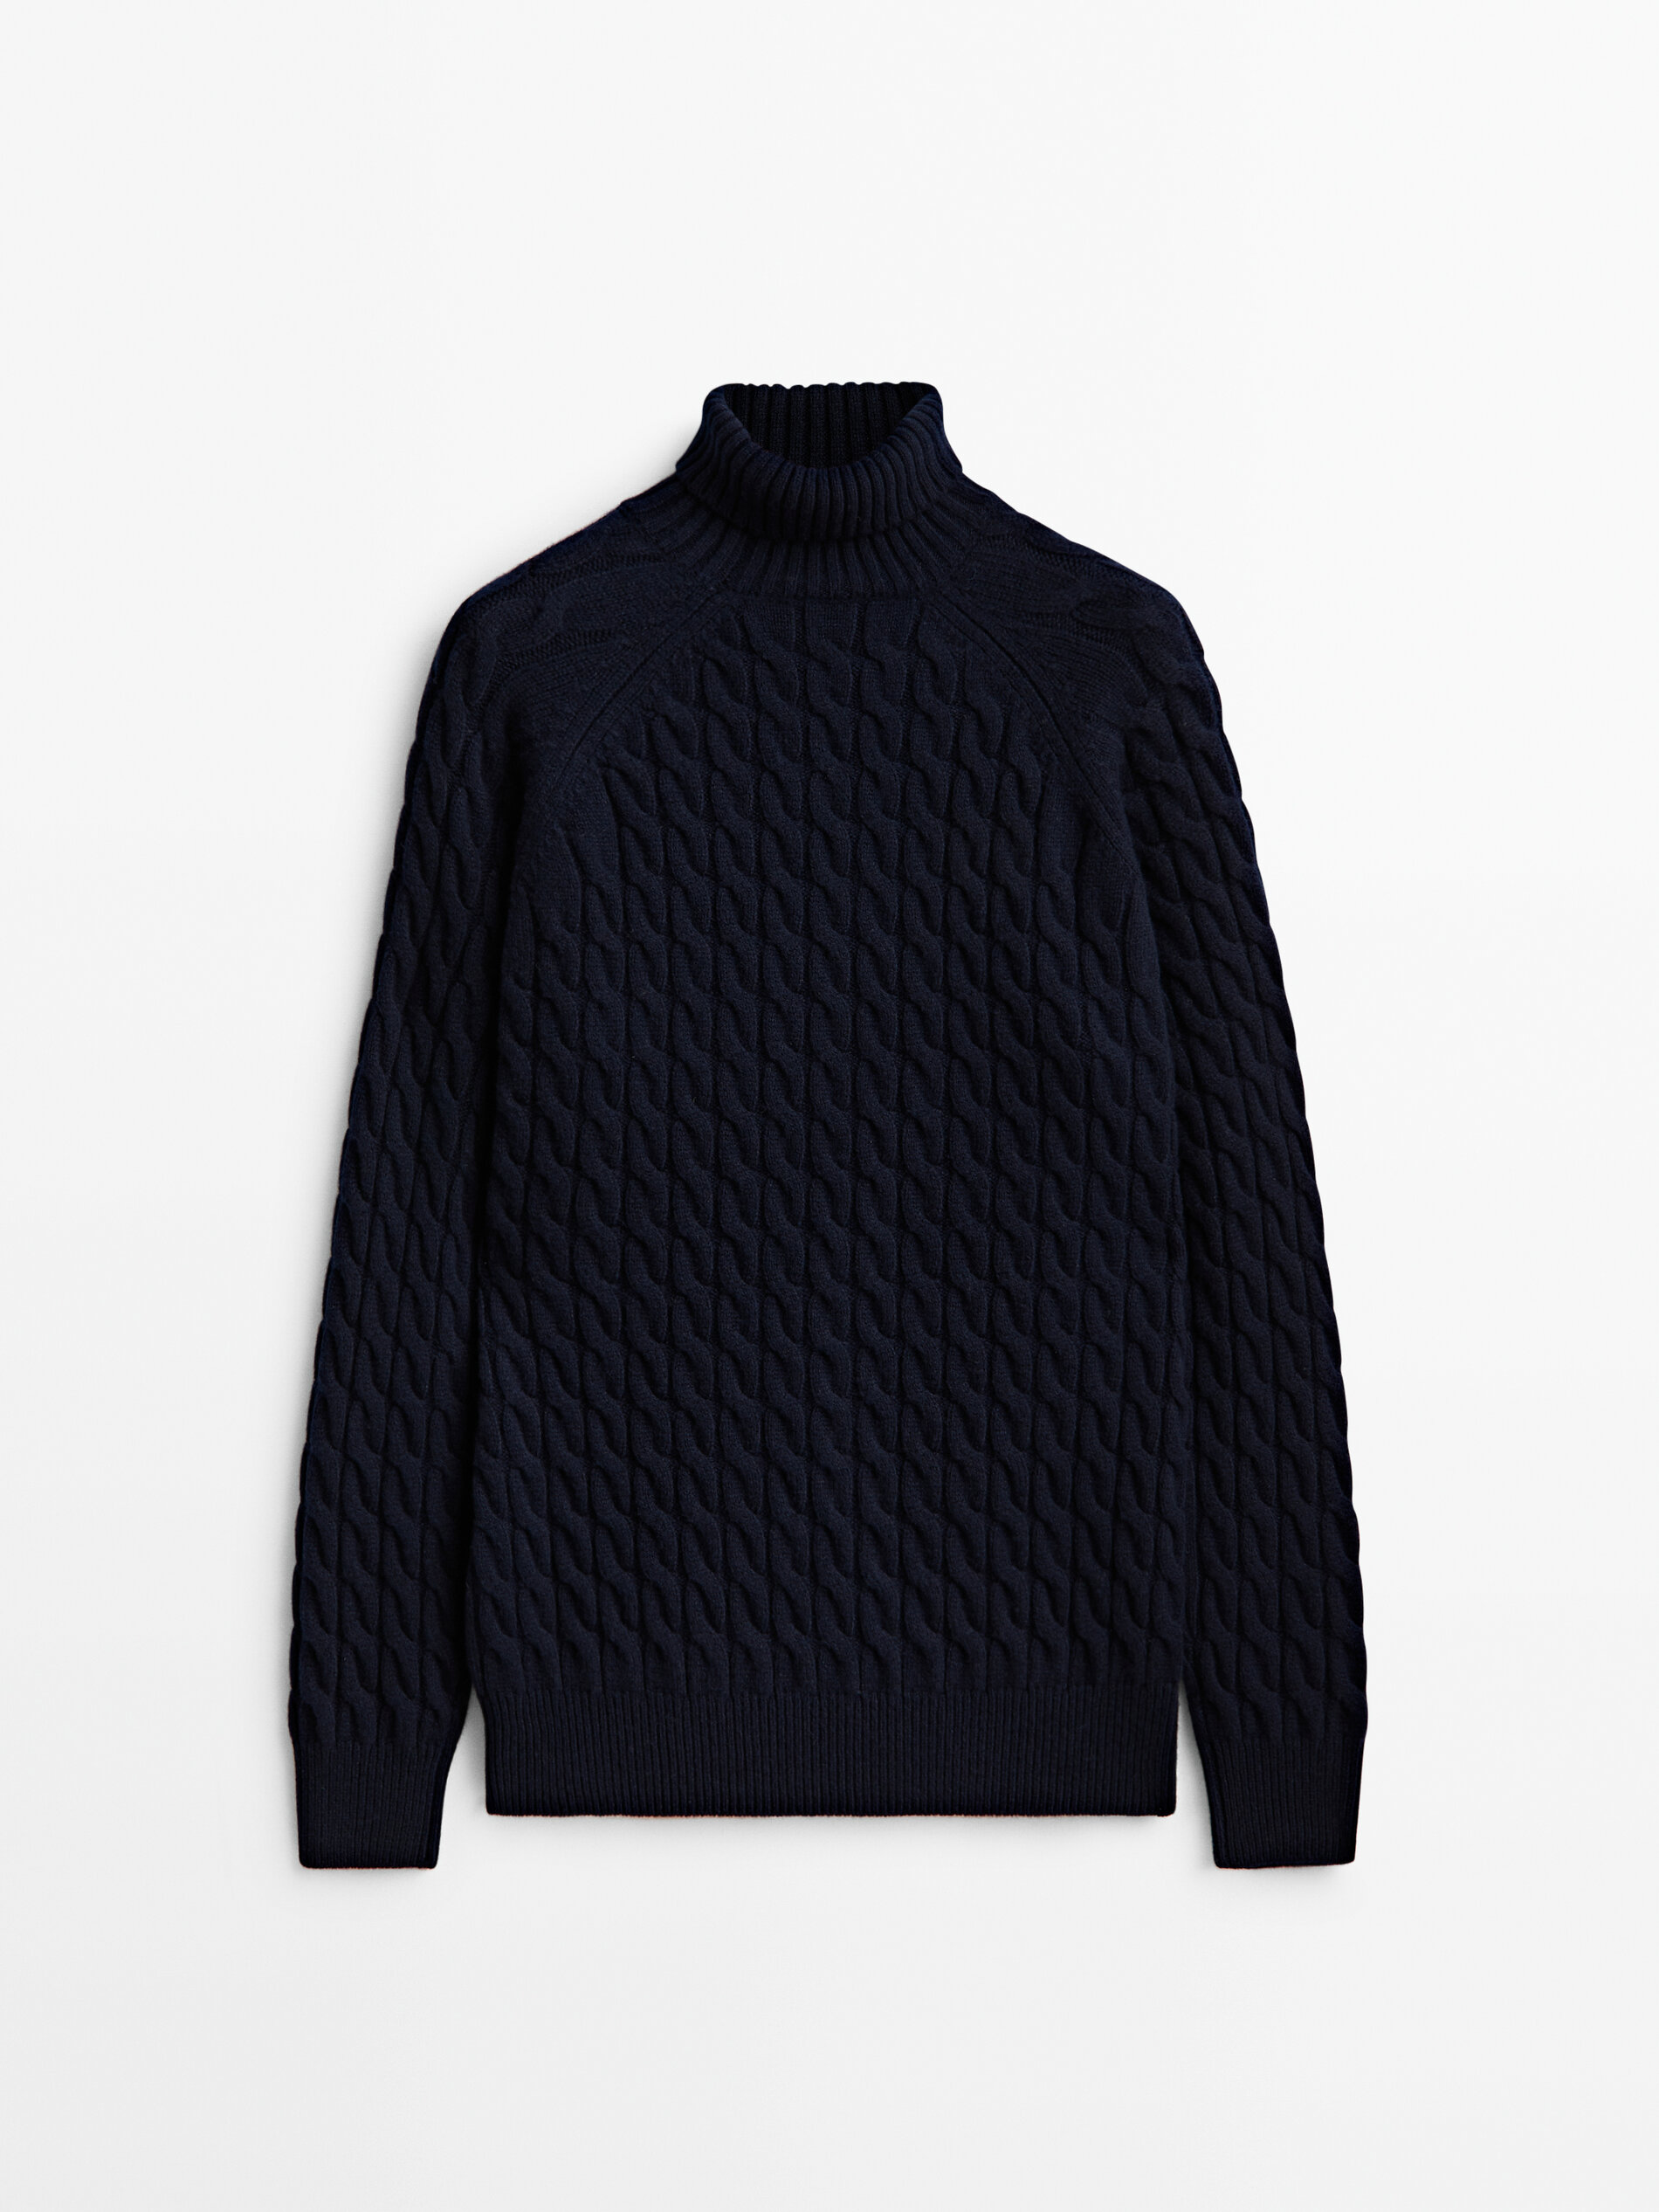 Blue M Massimo Dutti jumper discount 96% MEN FASHION Jumpers & Sweatshirts Elegant 